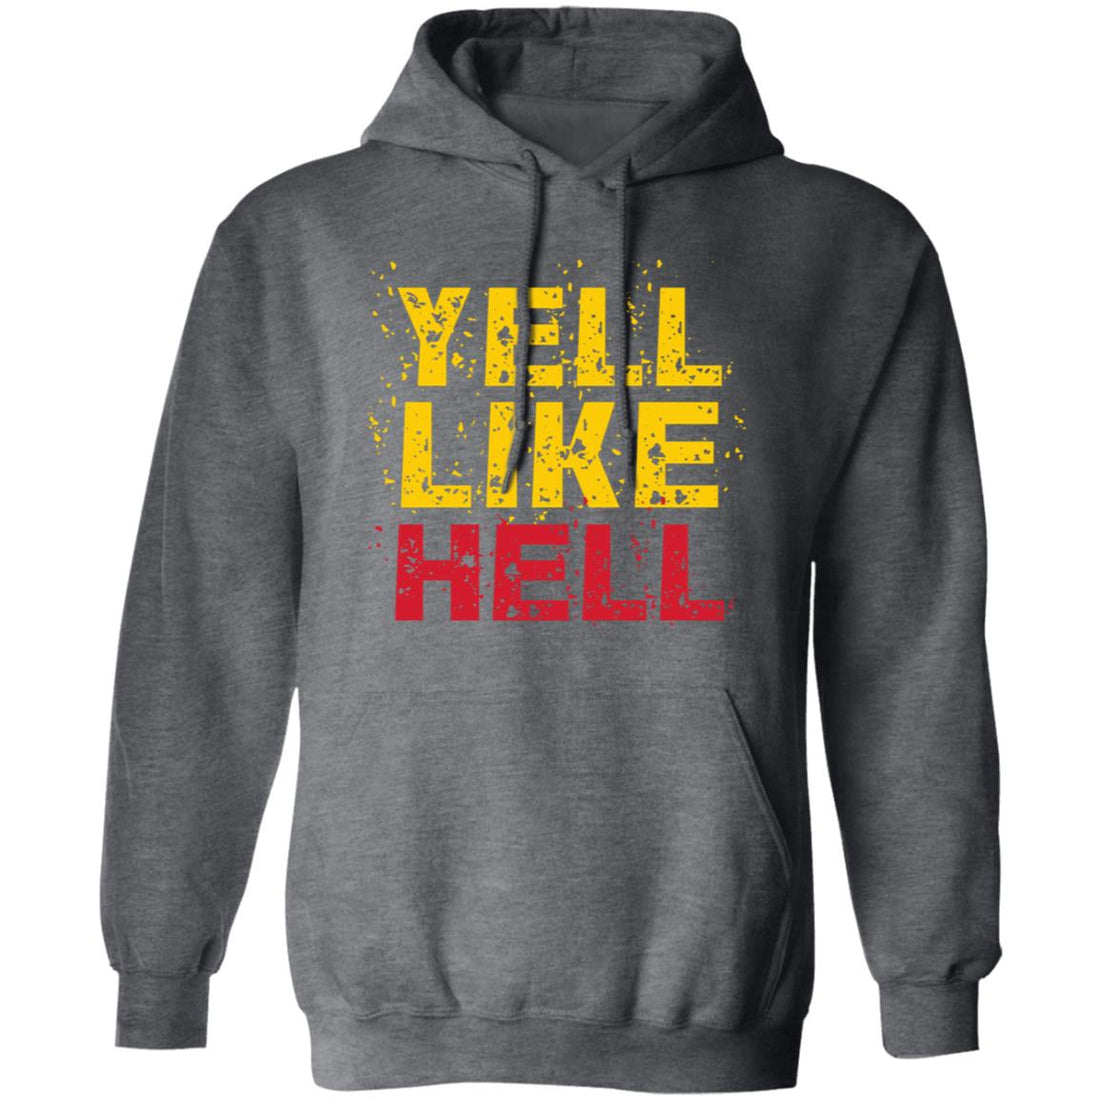 Yell Like Hell Pullover Hoodie - Sweatshirts - Positively Sassy - Yell Like Hell Pullover Hoodie